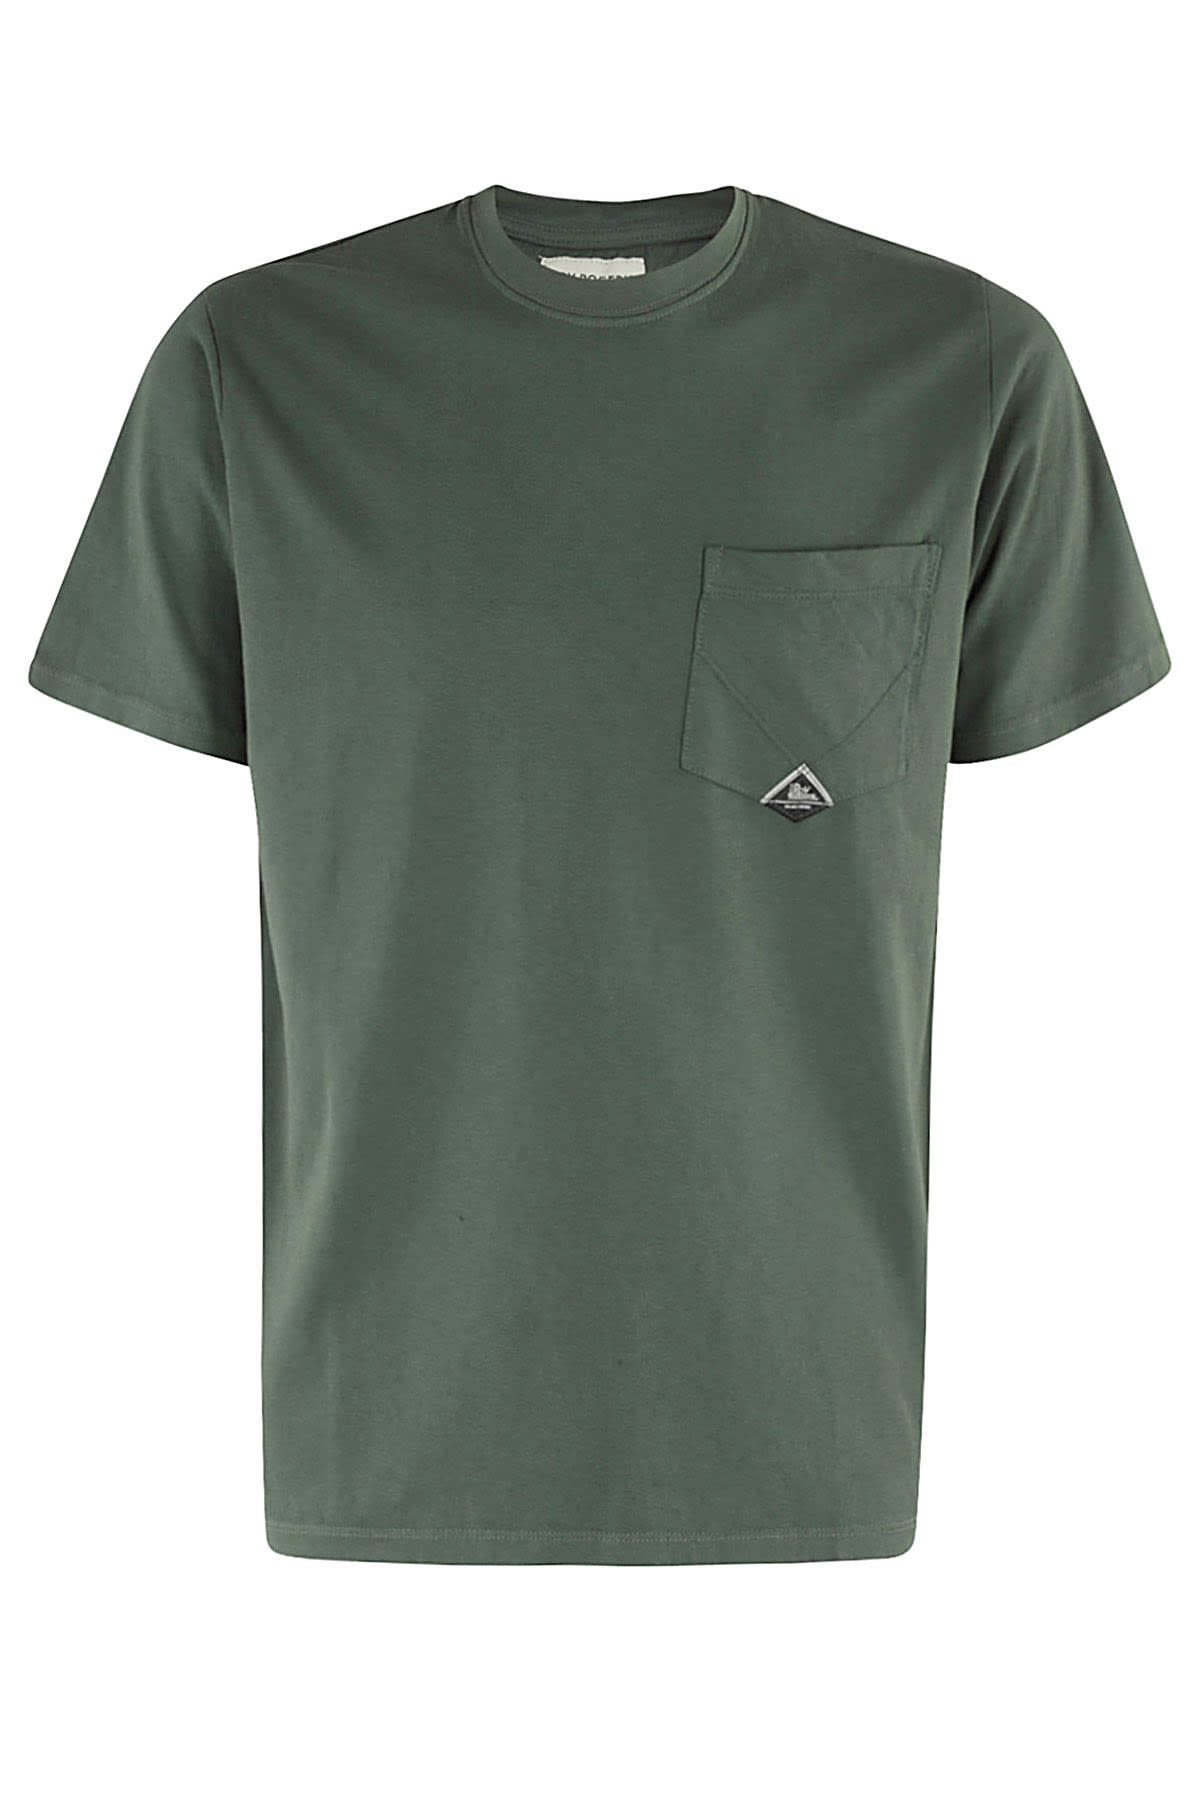 Roy Rogers T Shirt Pocket In University Green